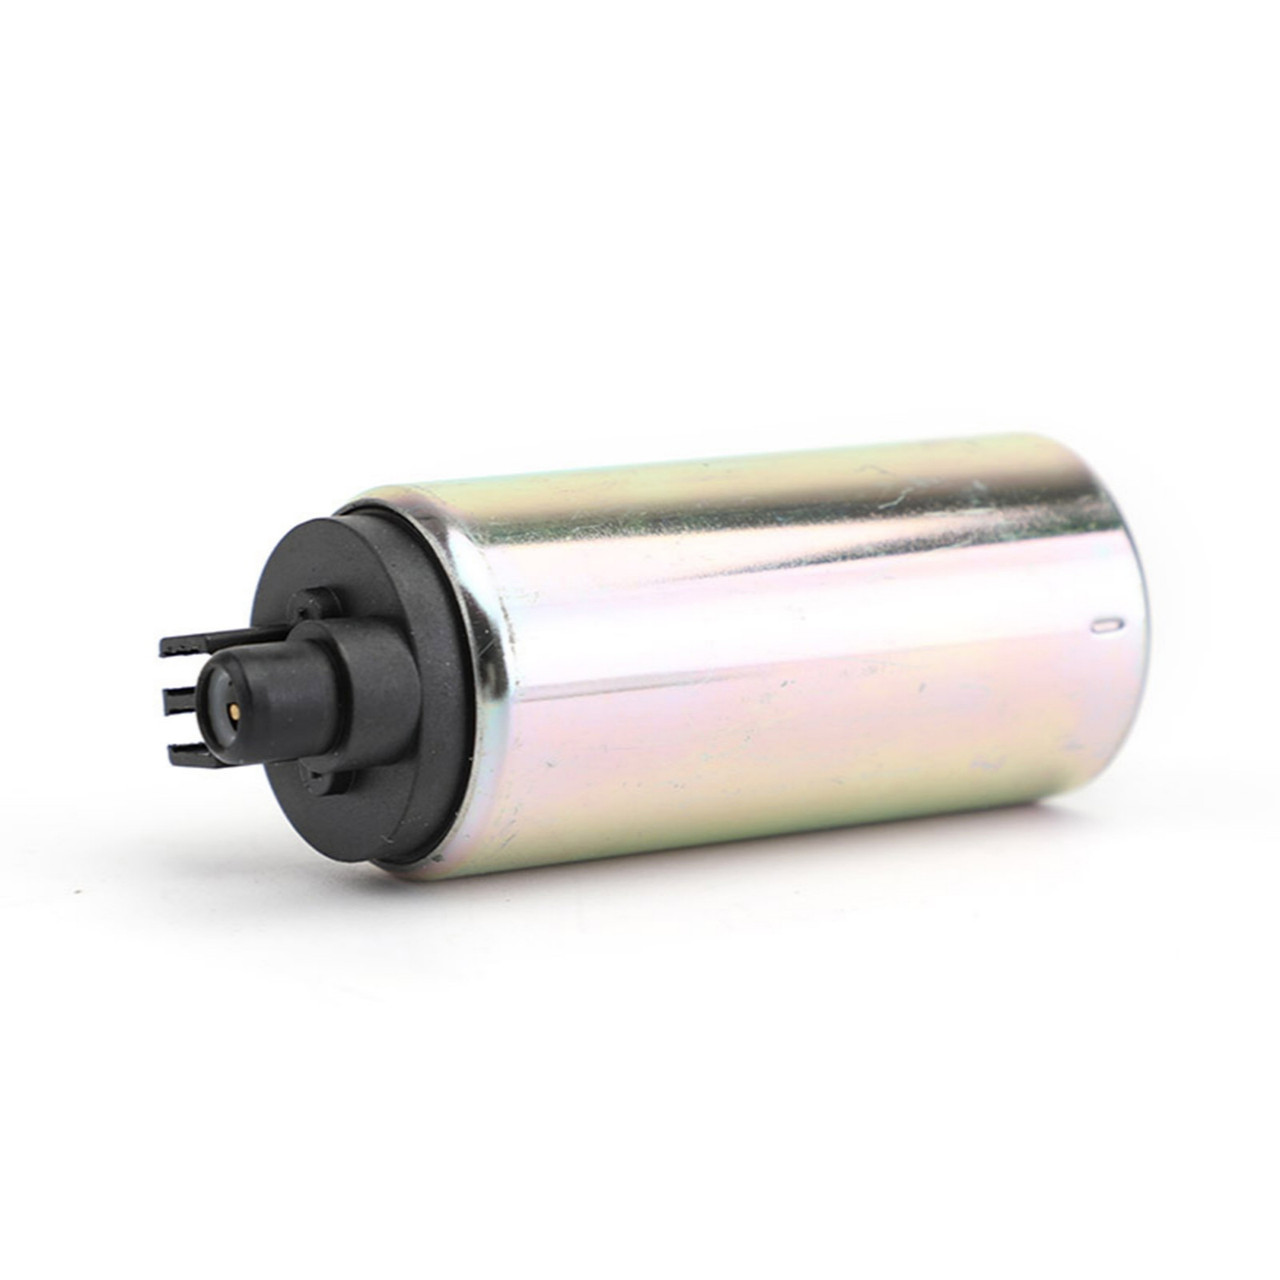 Petrol Fuel Pump & Strainer For Honda CMX300 17-18 KLX250 D-Tracker 09-16 KLX250 KLX250 09-17 Silver